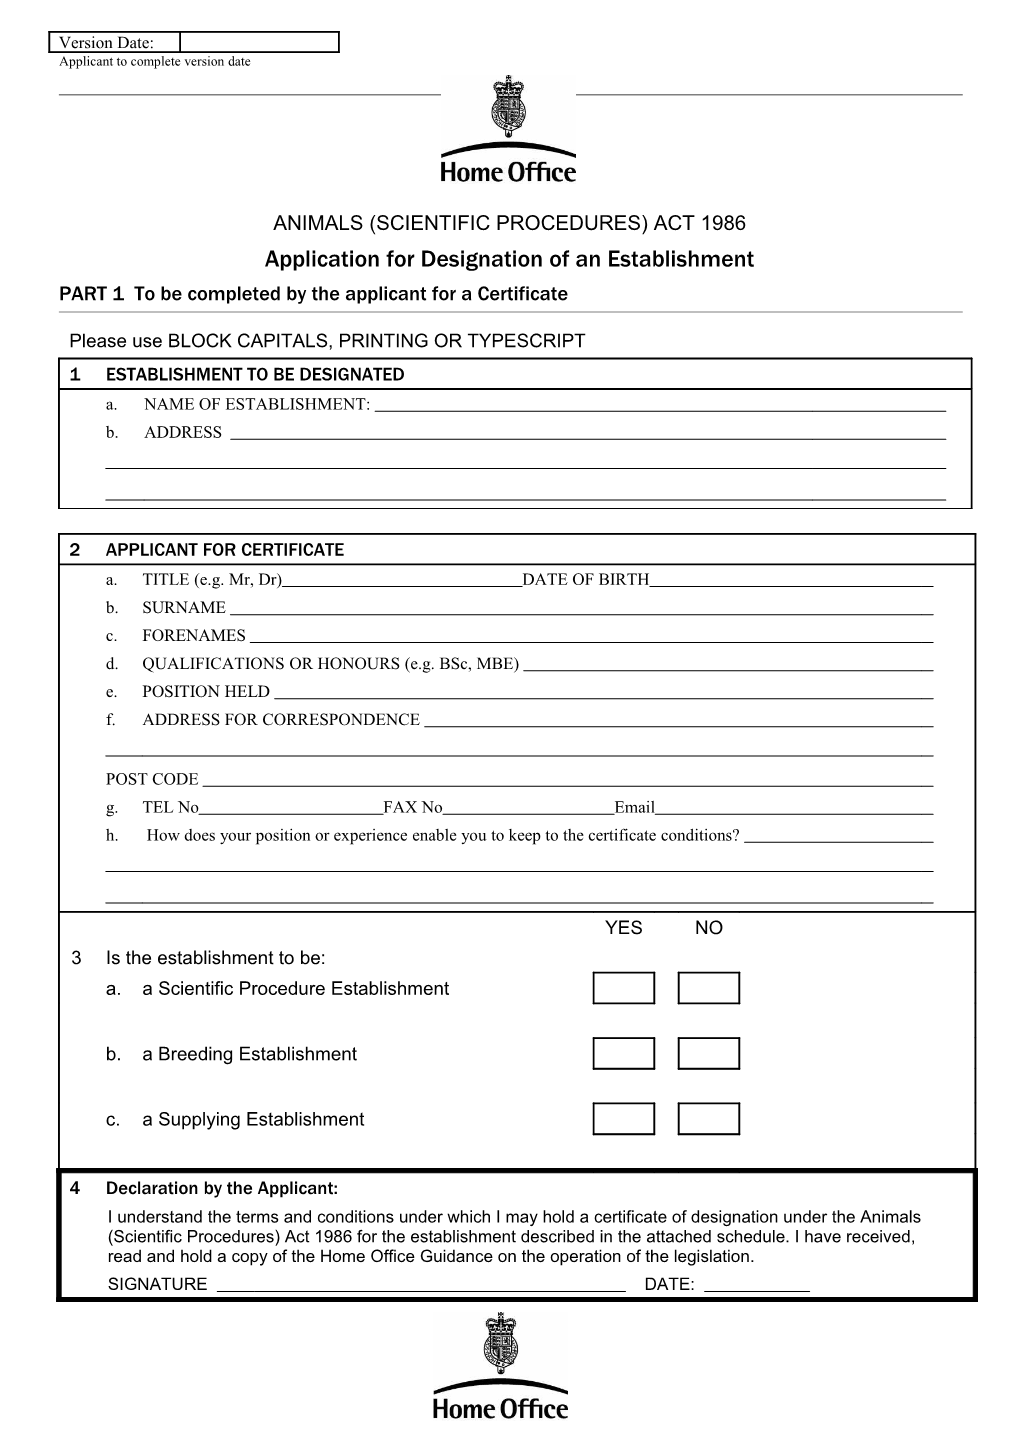 Application Form : Certificate of Designation